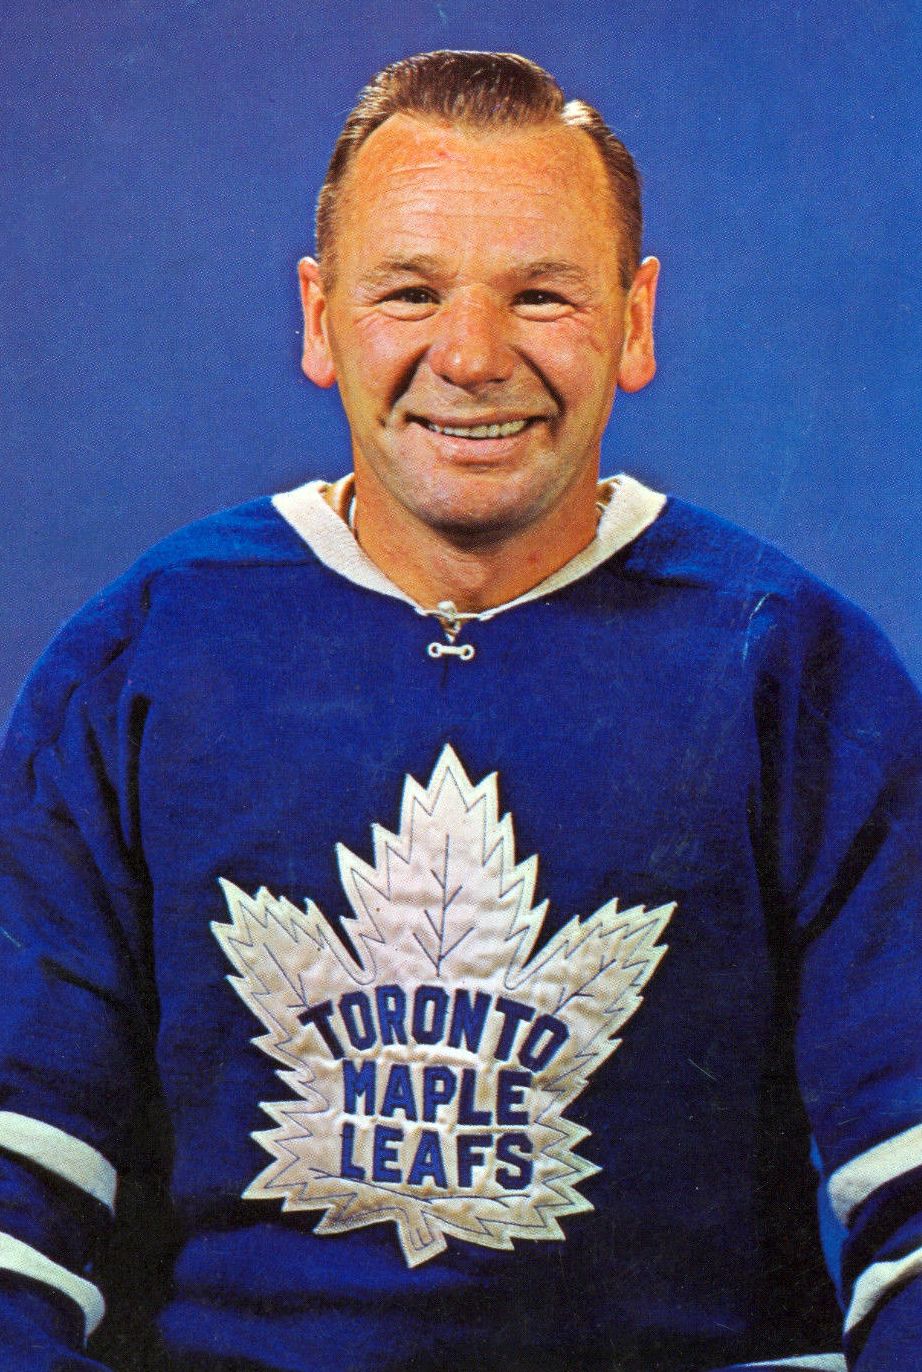 St. John's Maple Leafs - Wikipedia